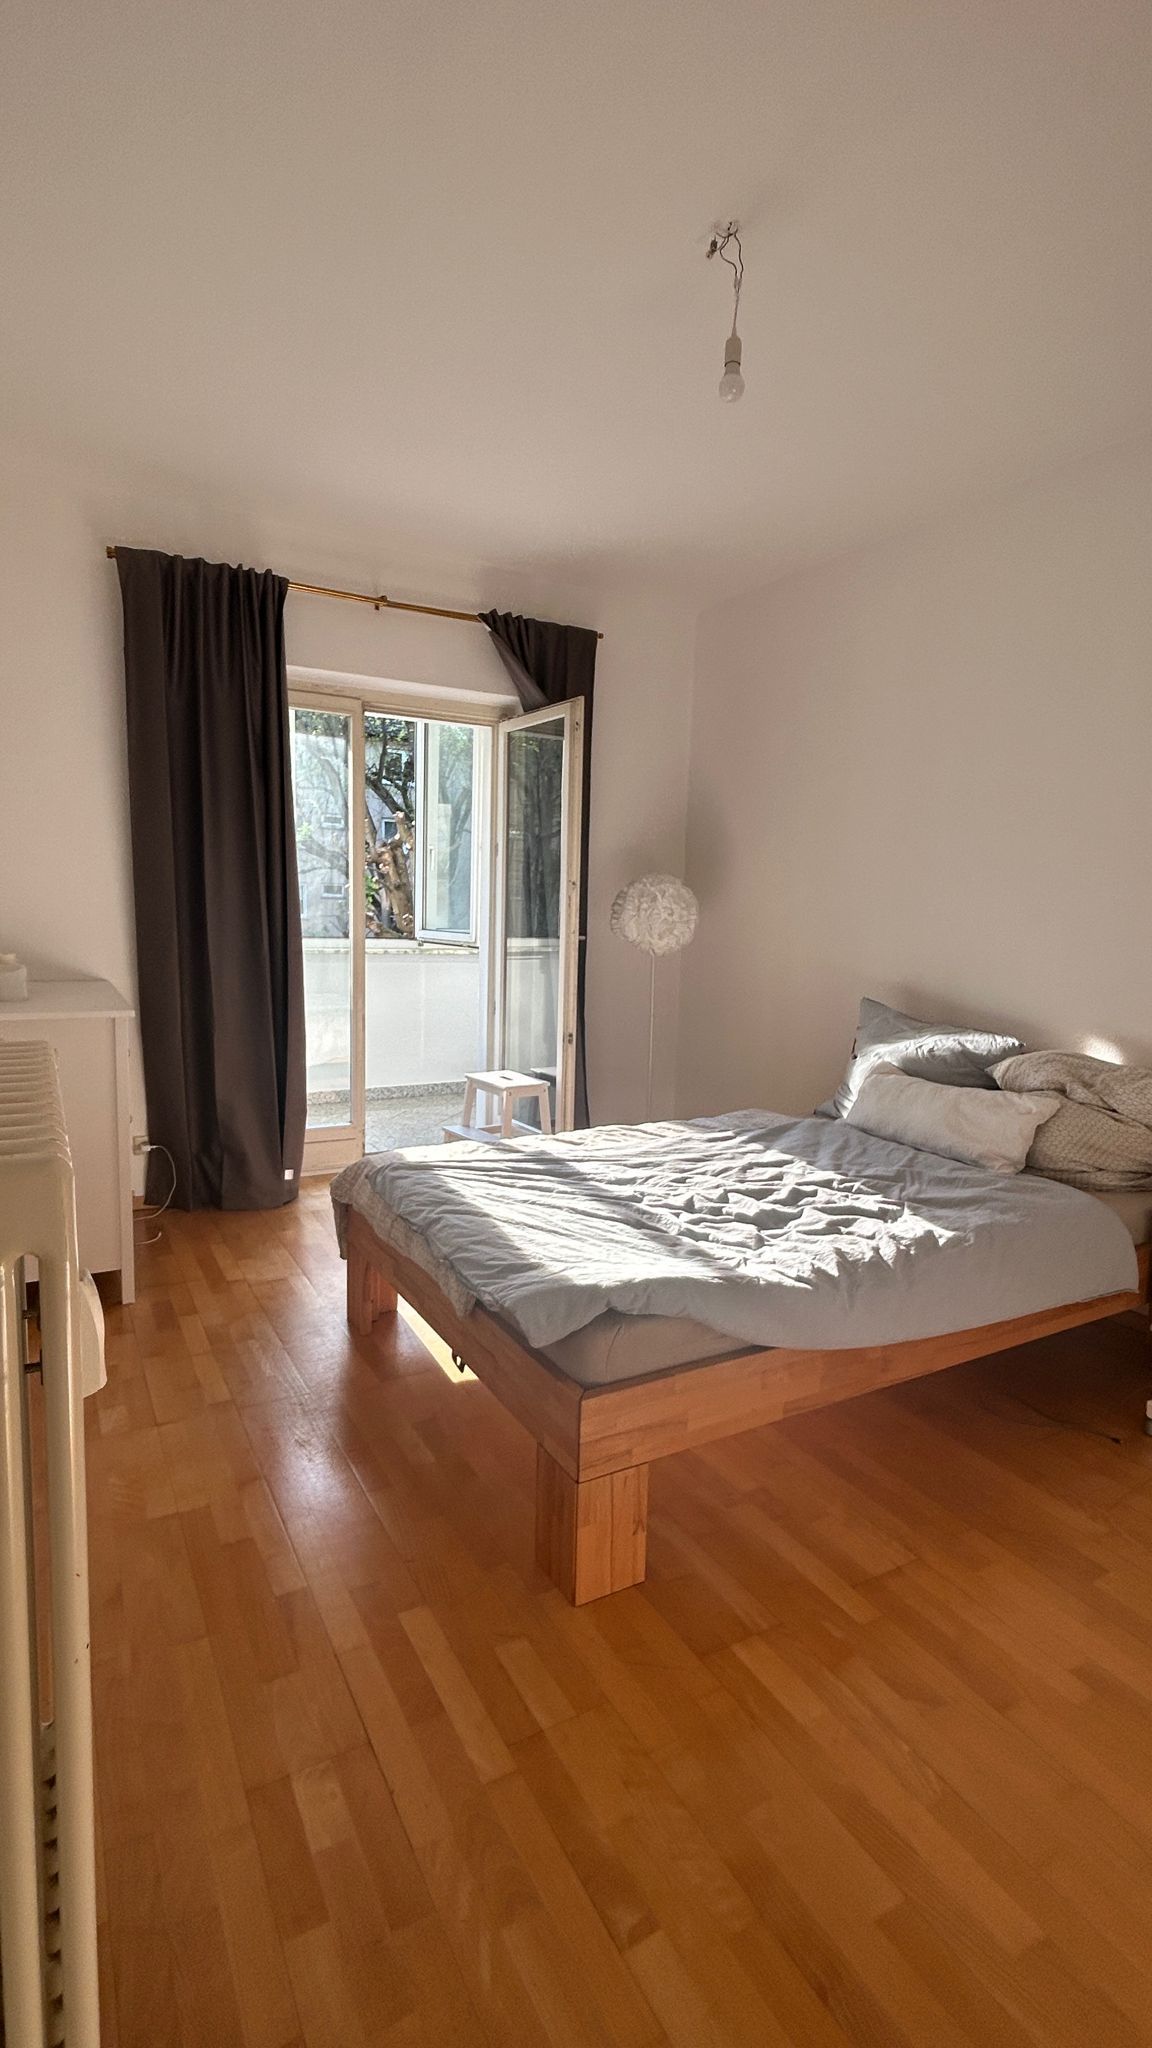 3-rooms apartment in Frankfurt / Subletting June-August